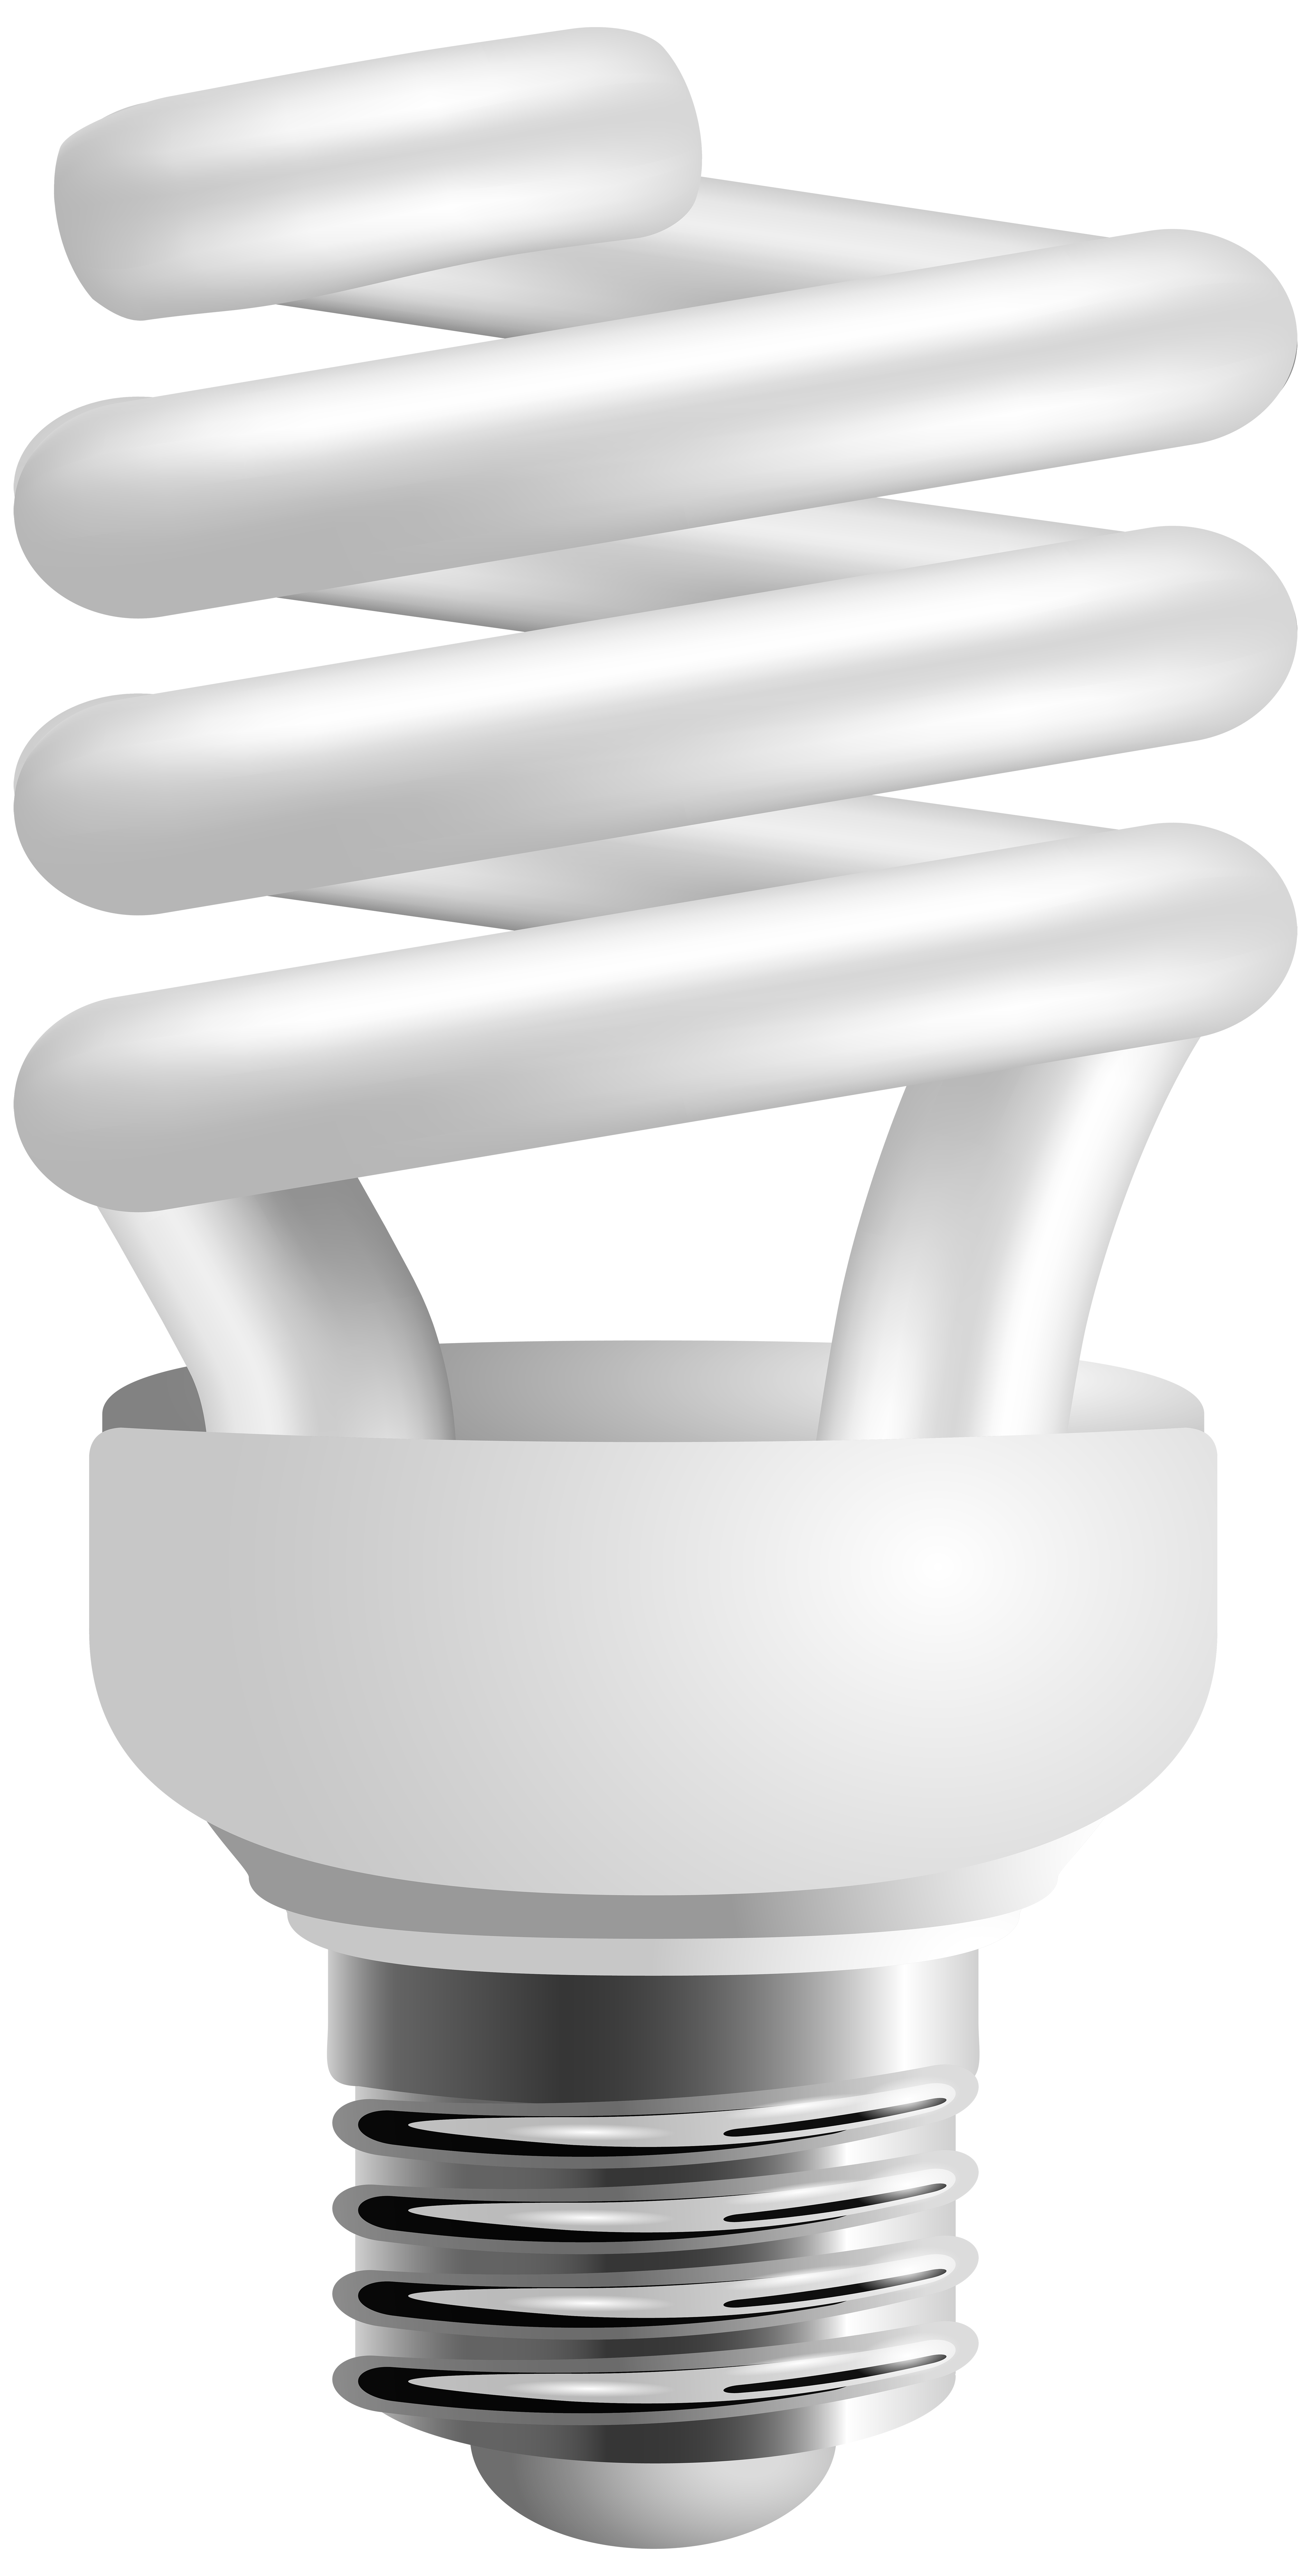 Lamp clipart flourescent lamp. Energy saving light bulb